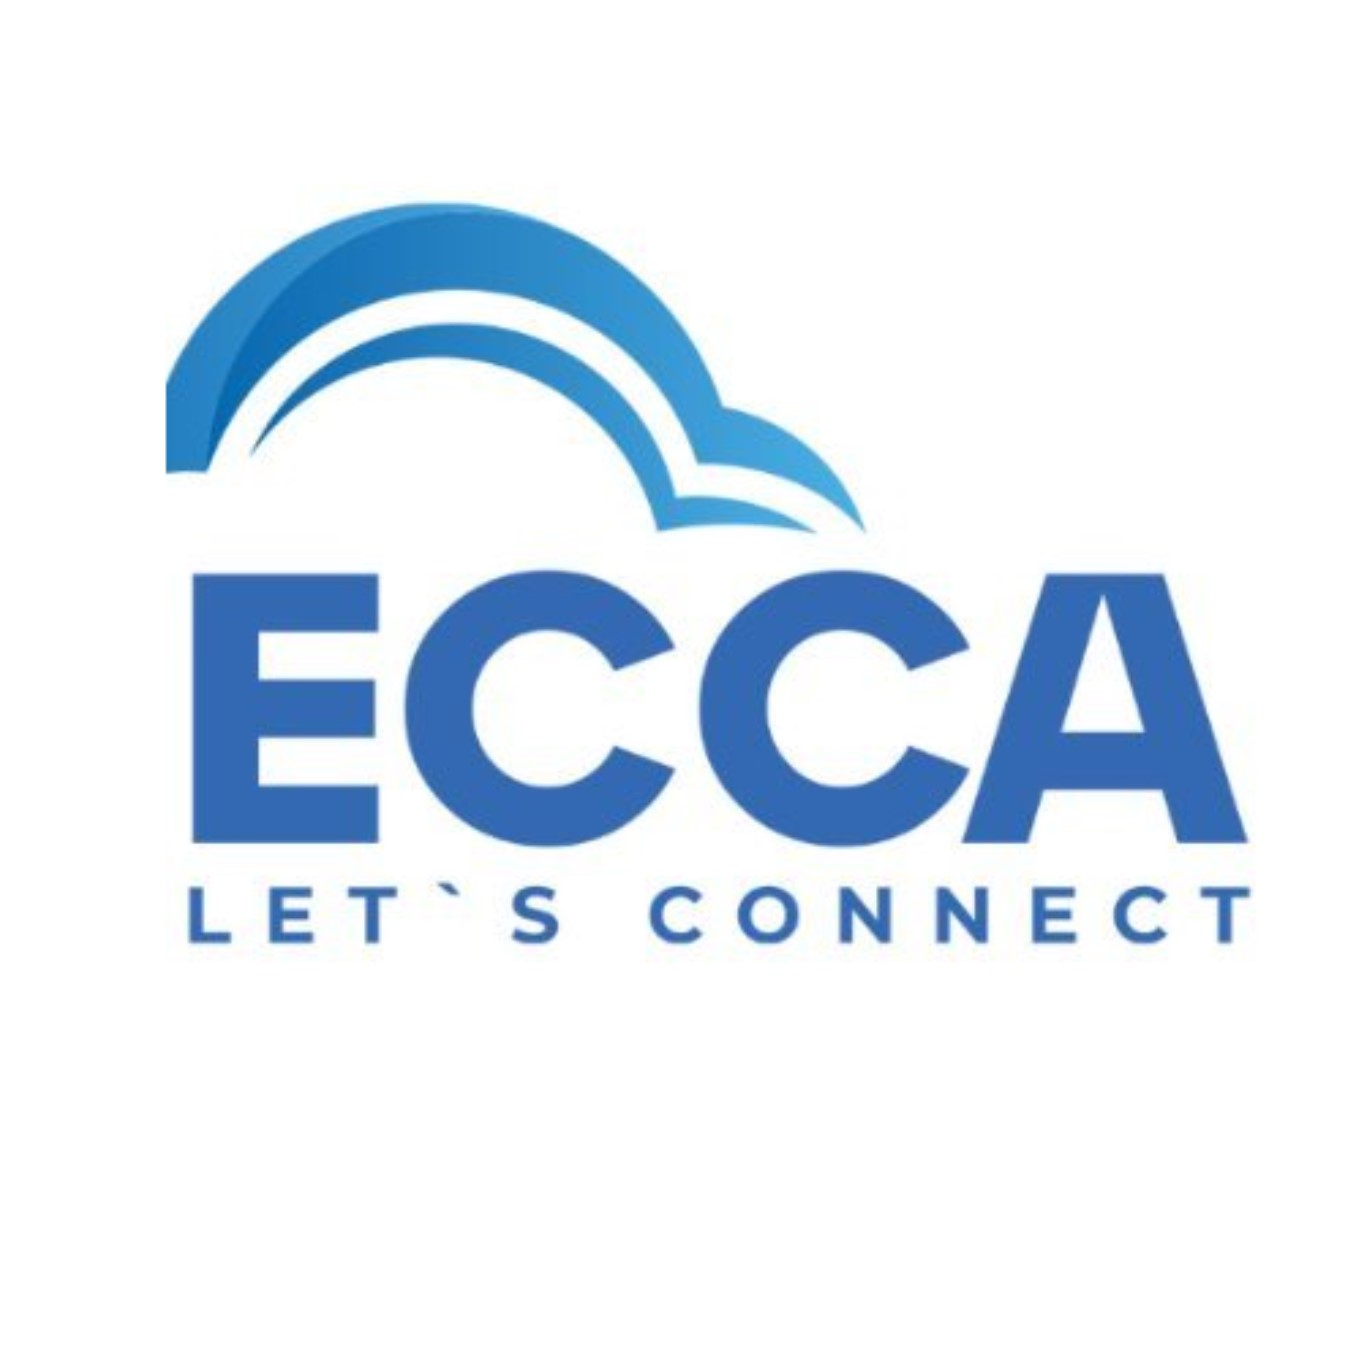 ECCA Group